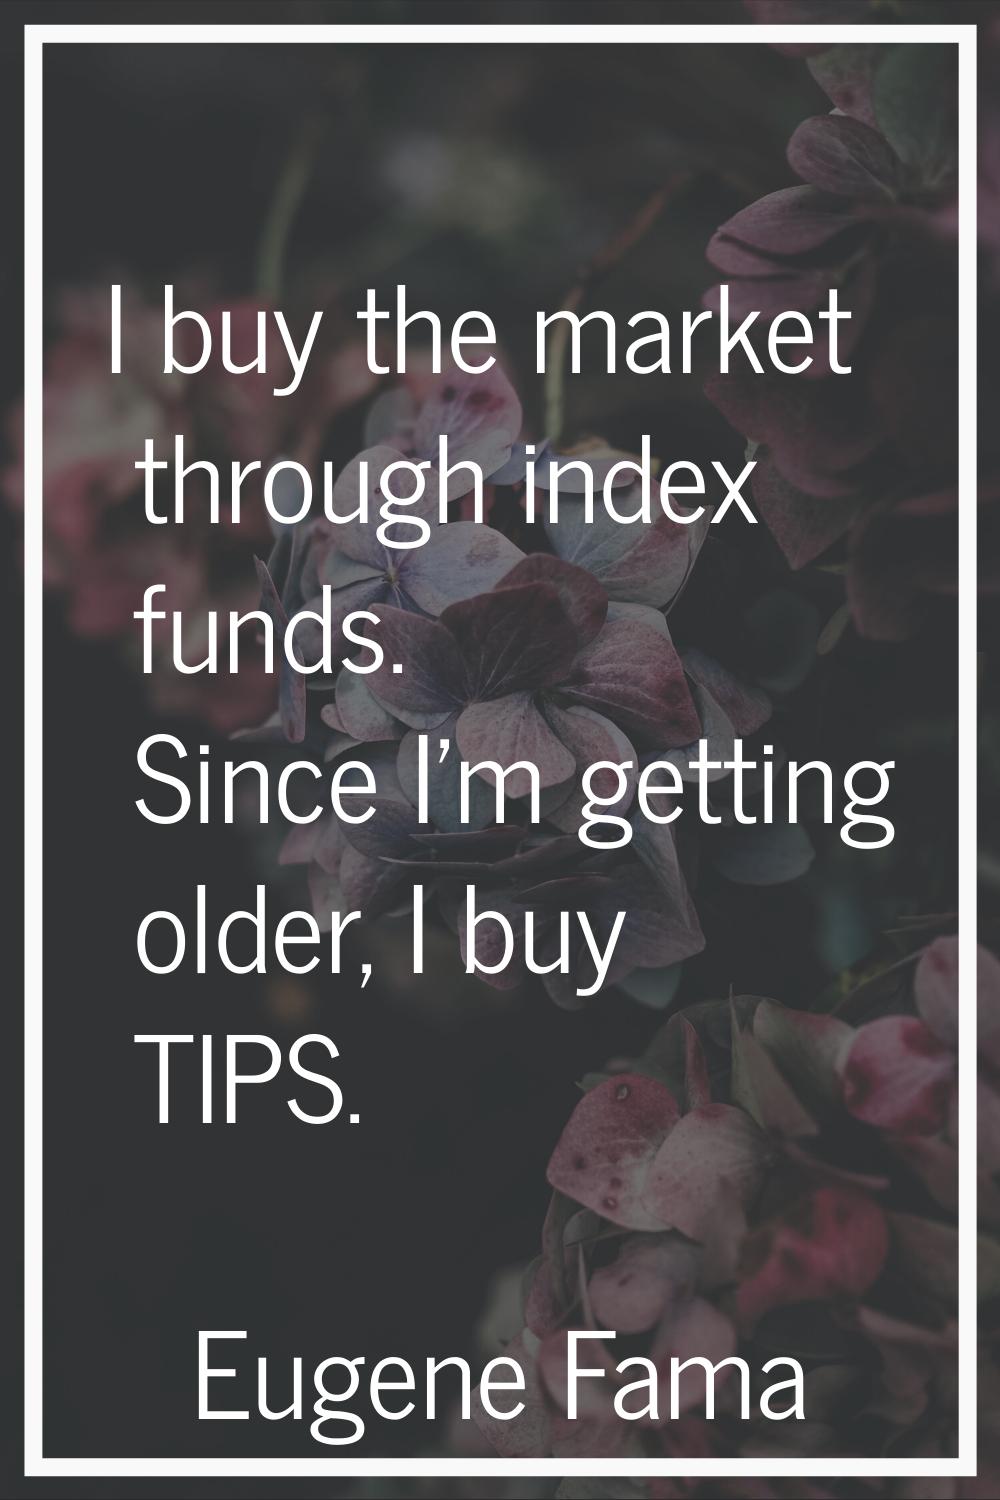 I buy the market through index funds. Since I'm getting older, I buy TIPS.